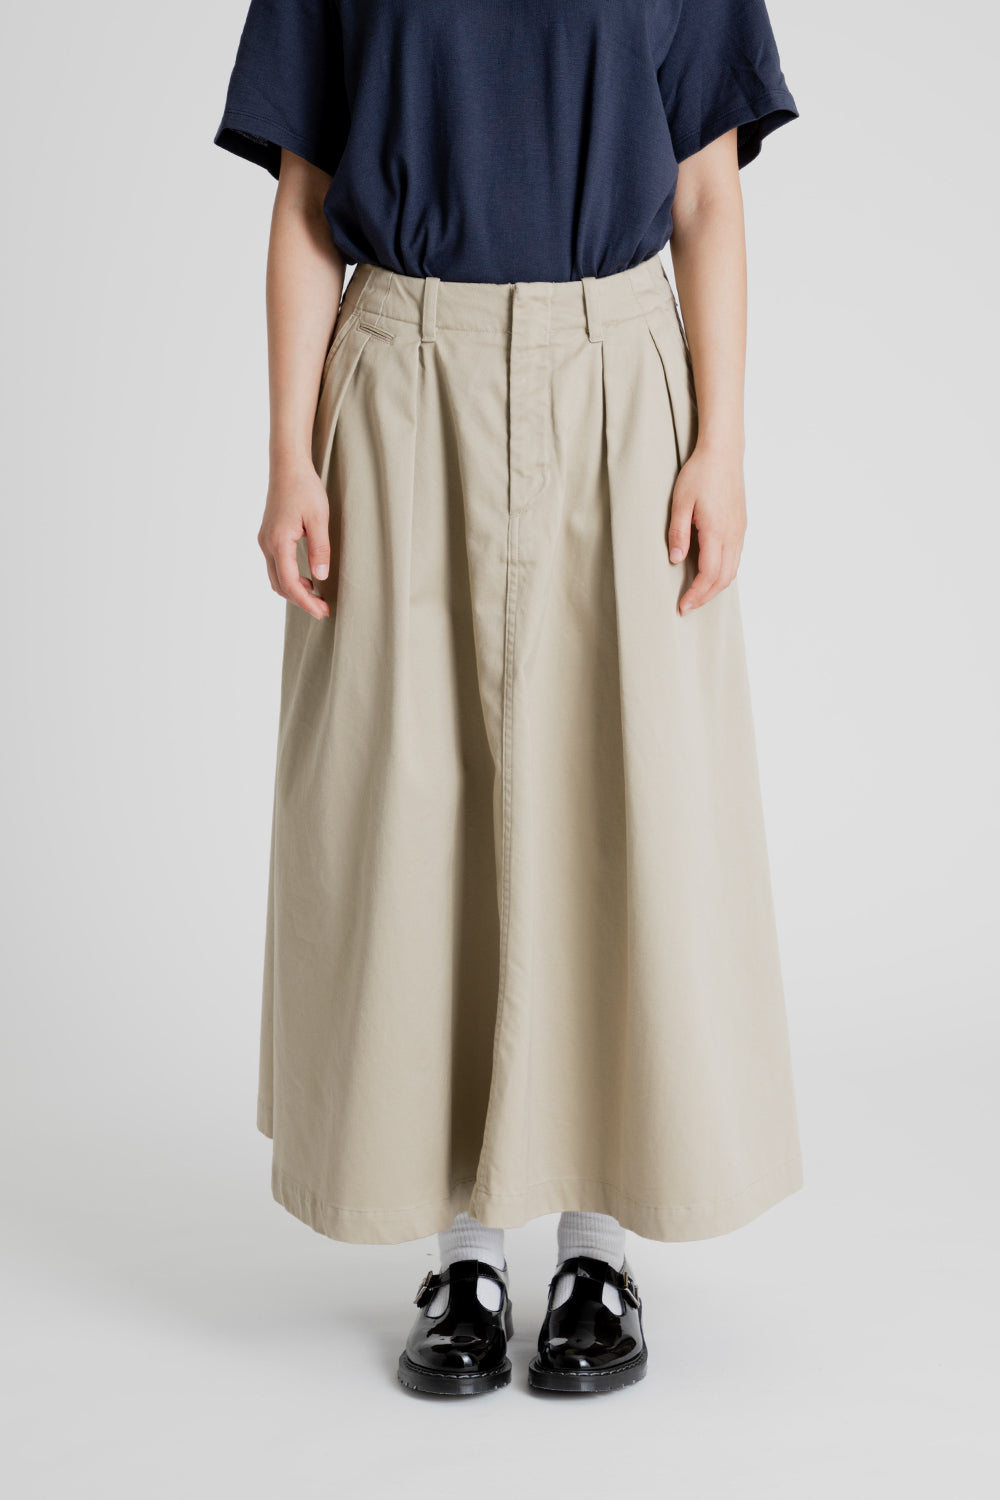 Nanamica Chino Skirt in Khaki